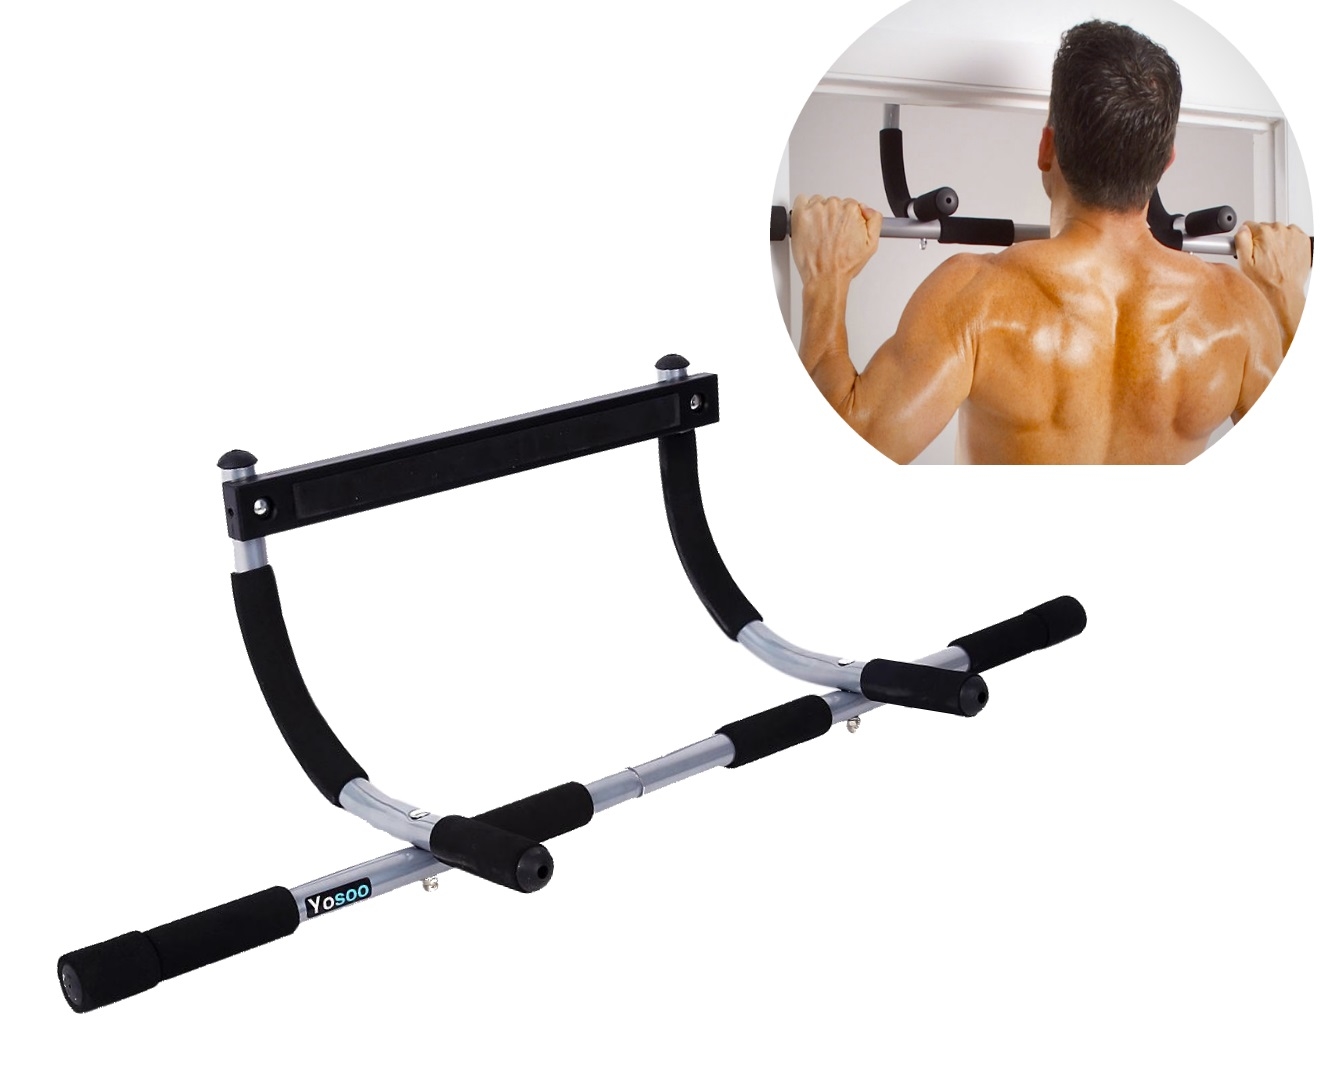 Portable Doorway Chin Up bar Pull Ups Weights Gym